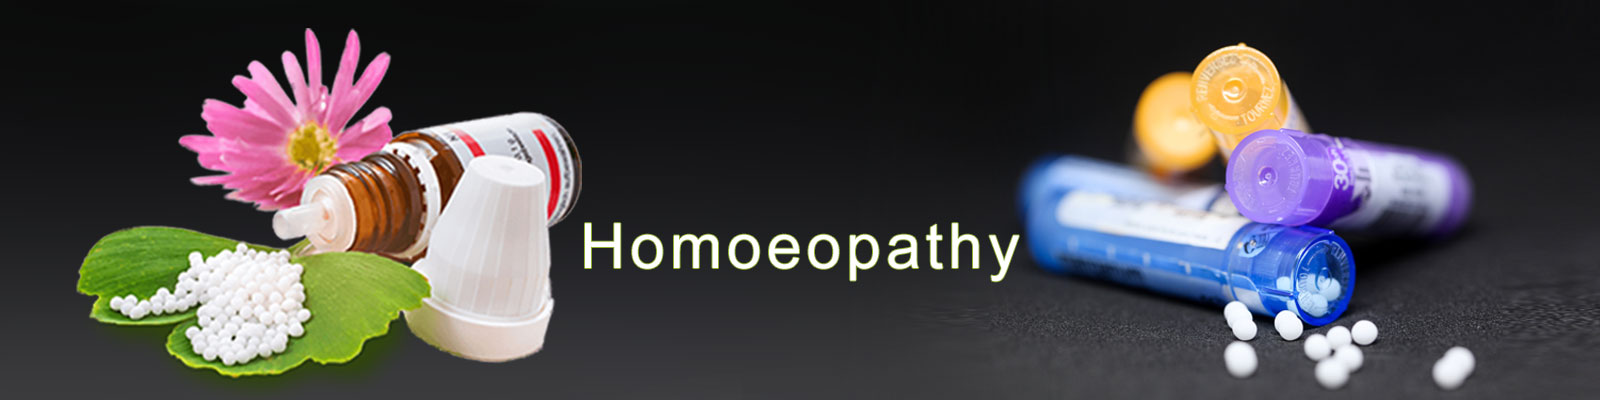 Trikaay homoeopathy